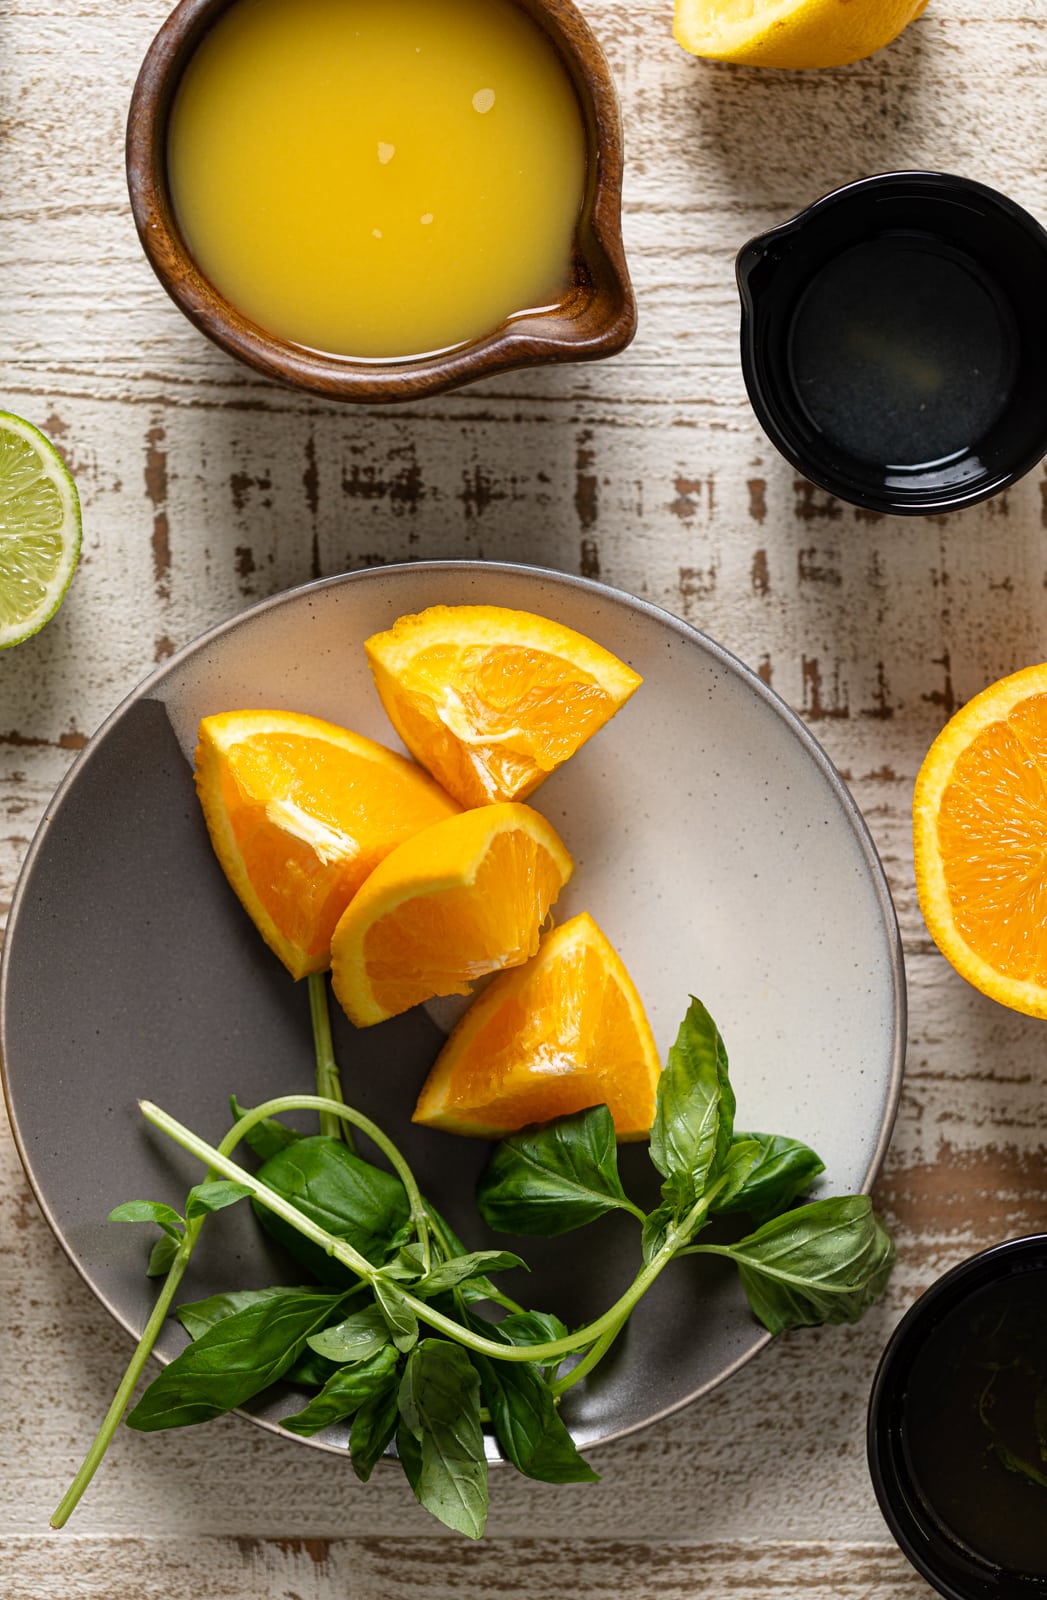 Ingredients for Orange Crush Mocktail with Basil including orange, basil leaves, and lime